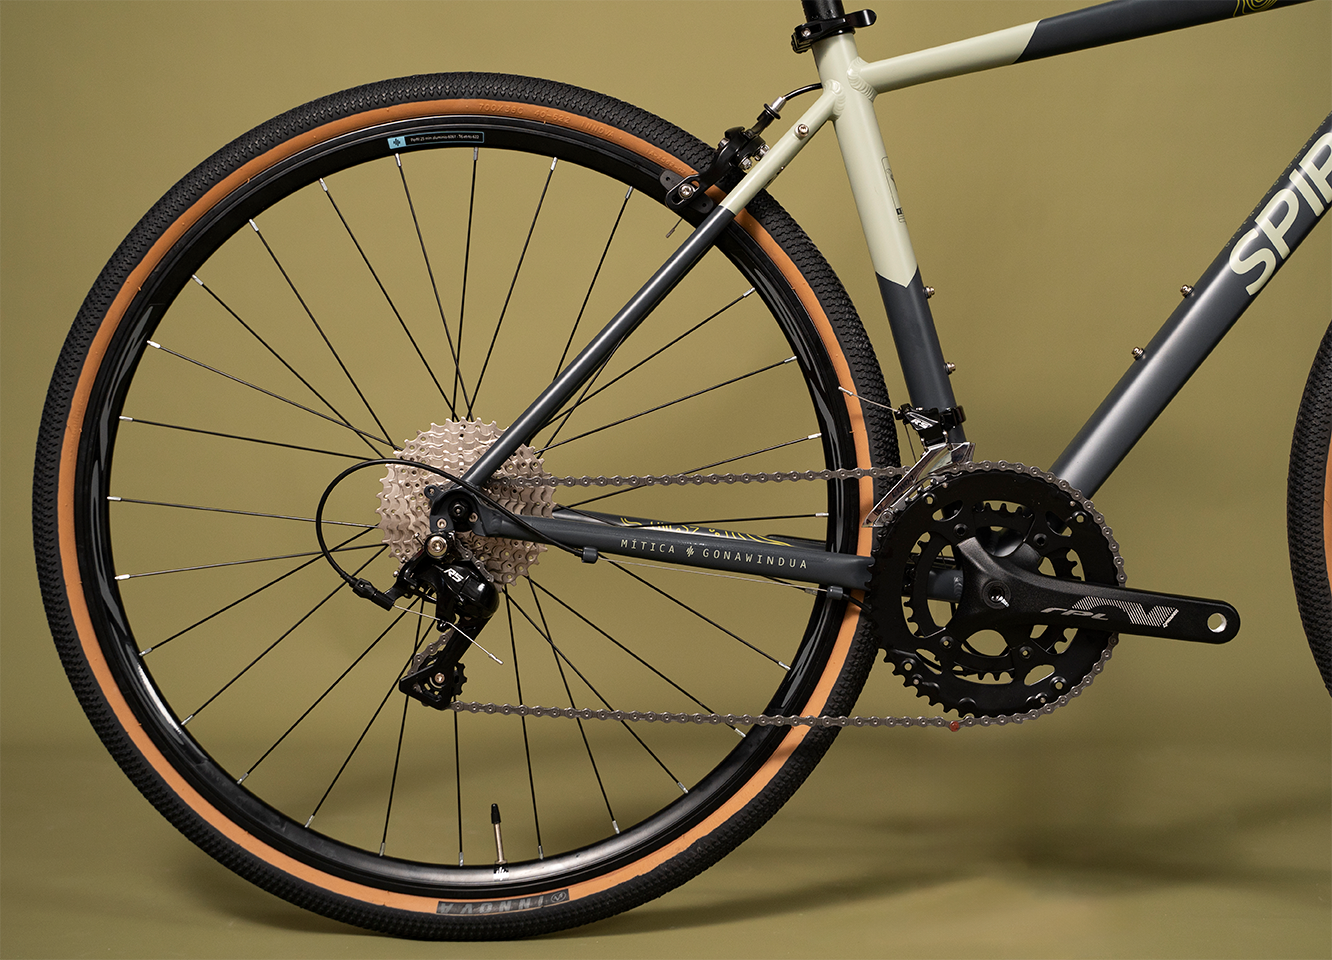 Bicicleta de gravel/ruta en aluminio Mítica Gonawindua